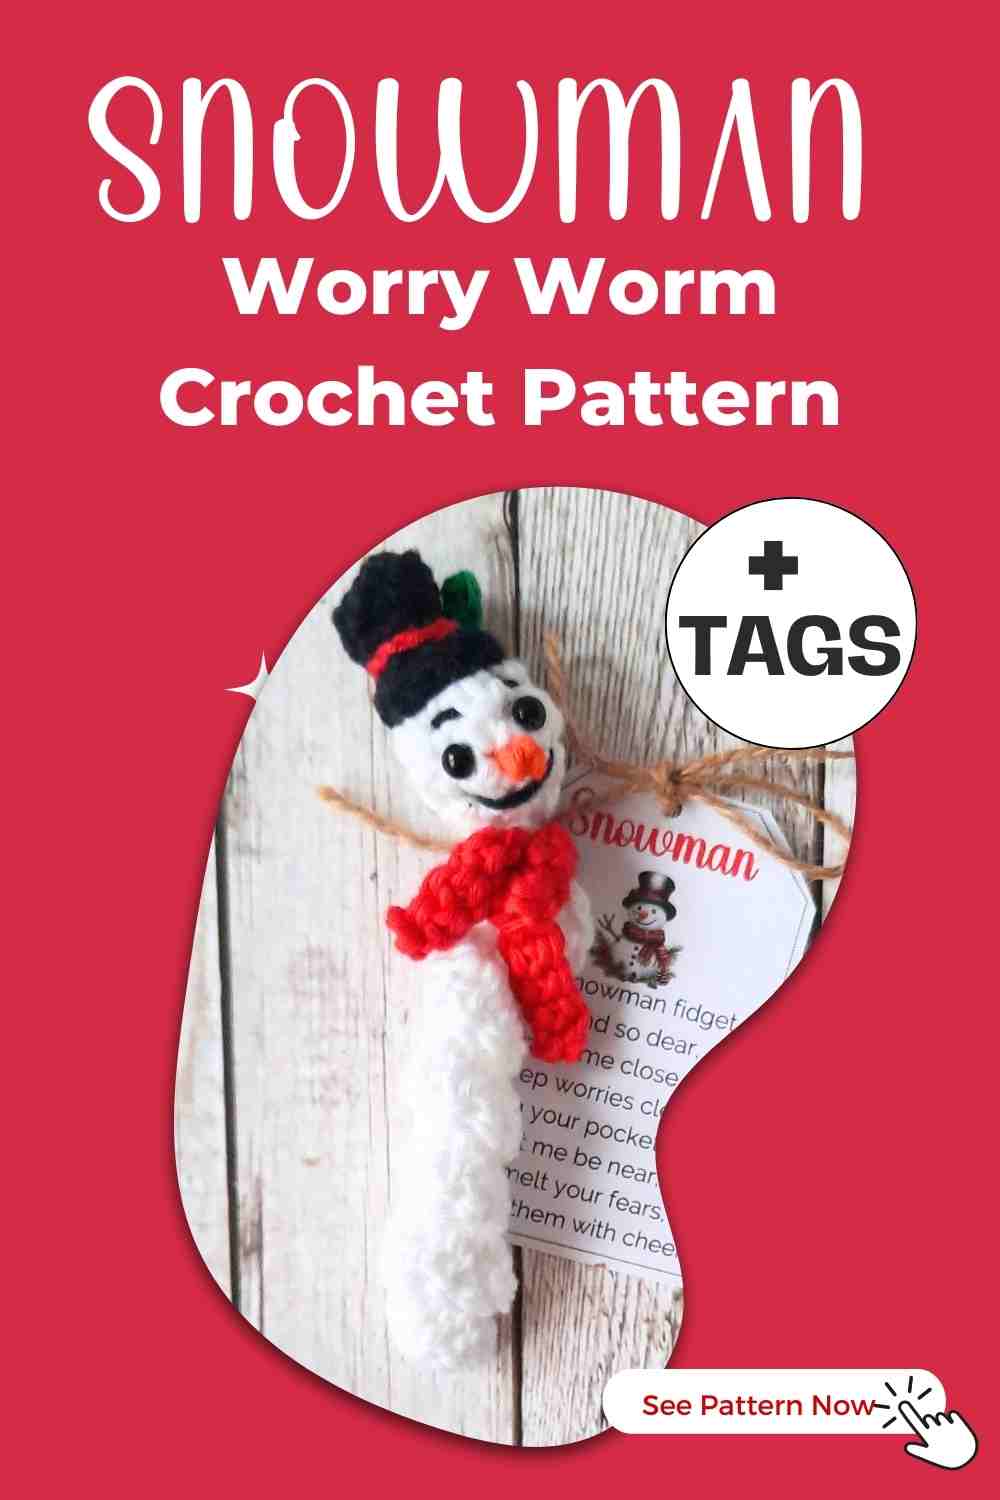 Snowman Worry Worm Crochet Pattern